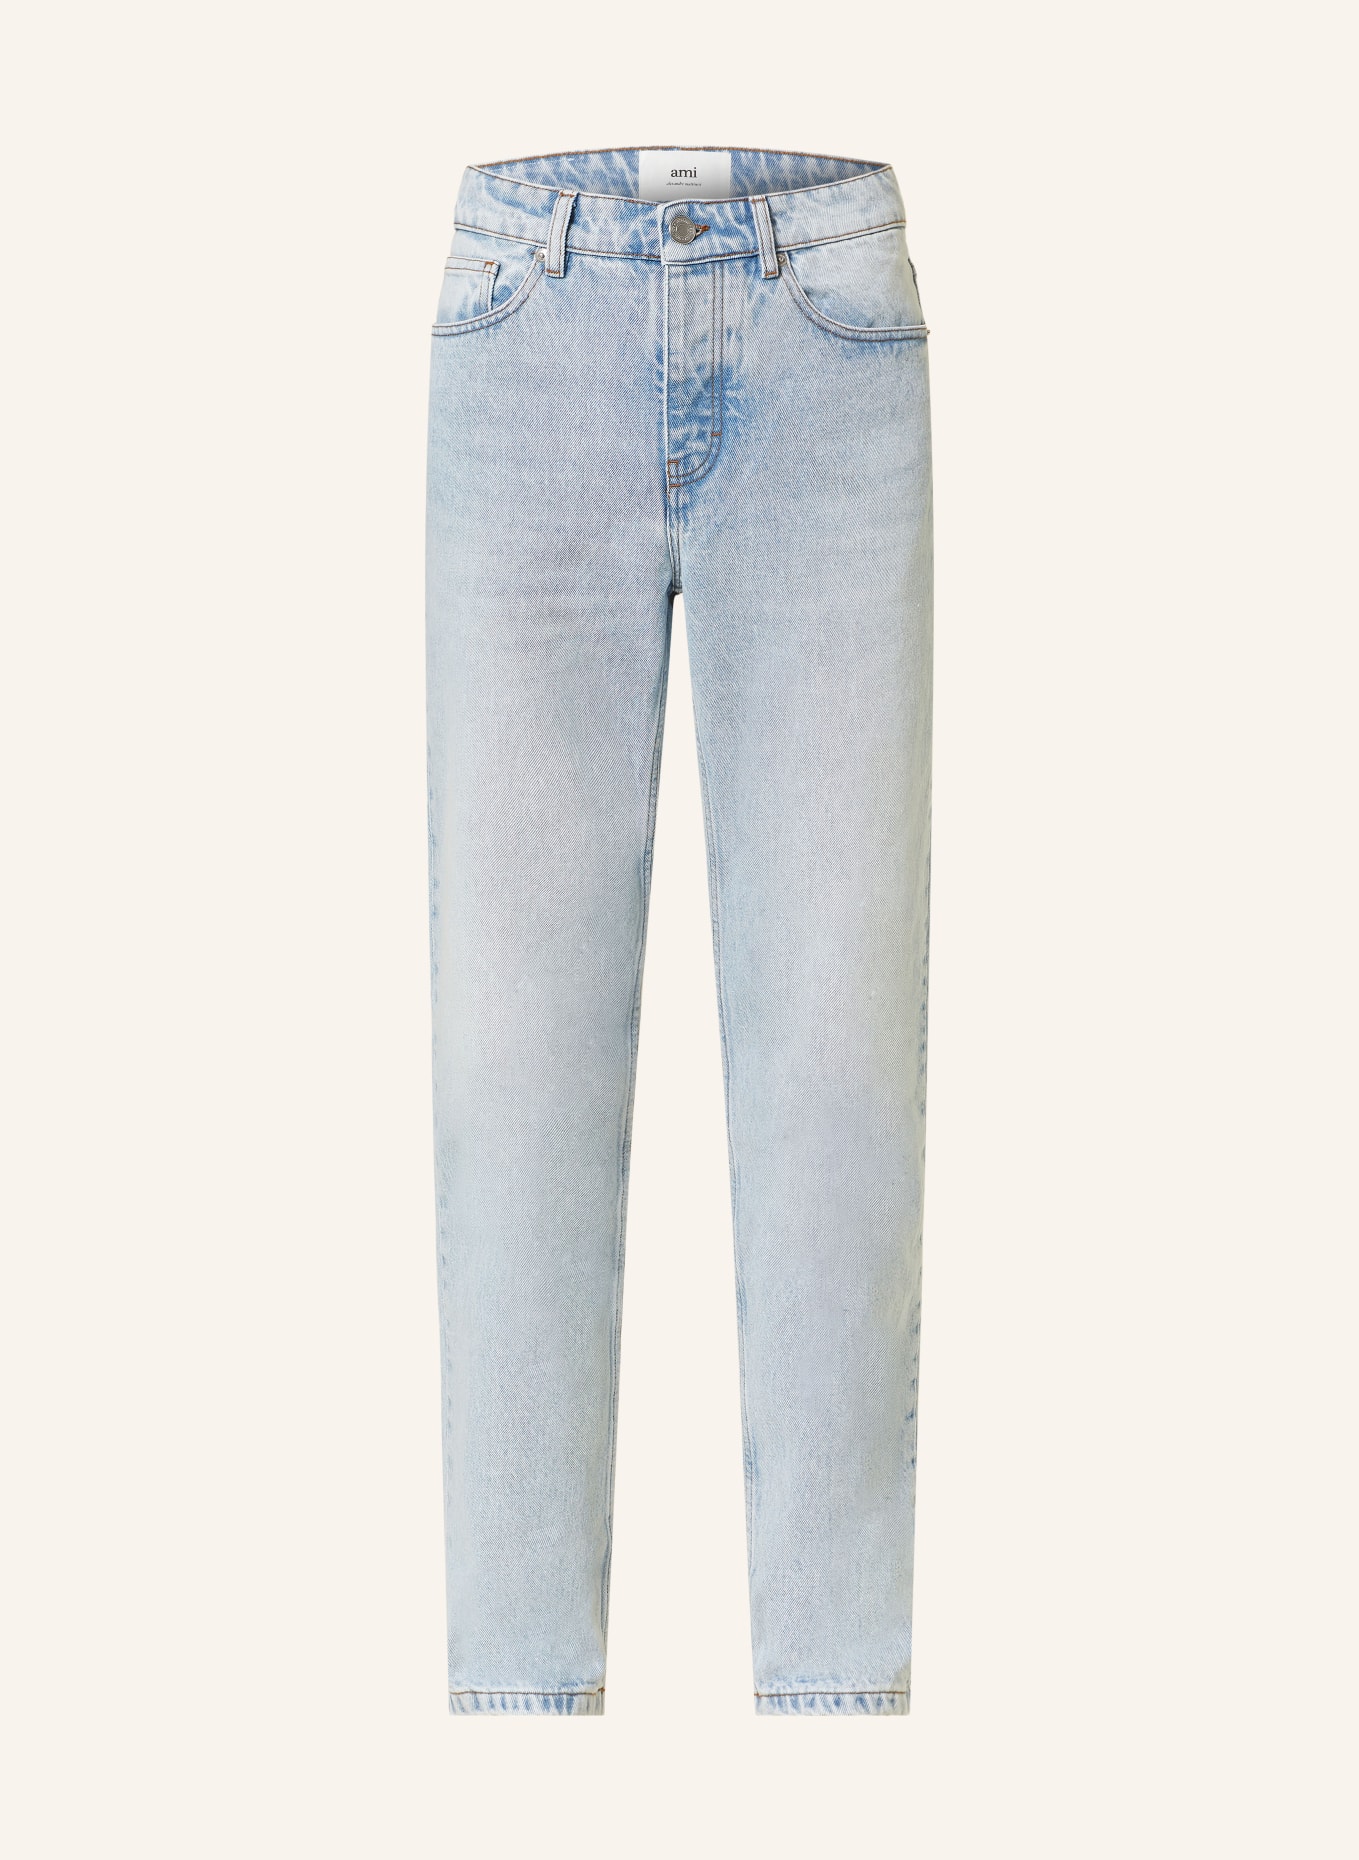 AMI PARIS Jeans Regular Fit, Farbe: 448 BLEACH (Bild 1)